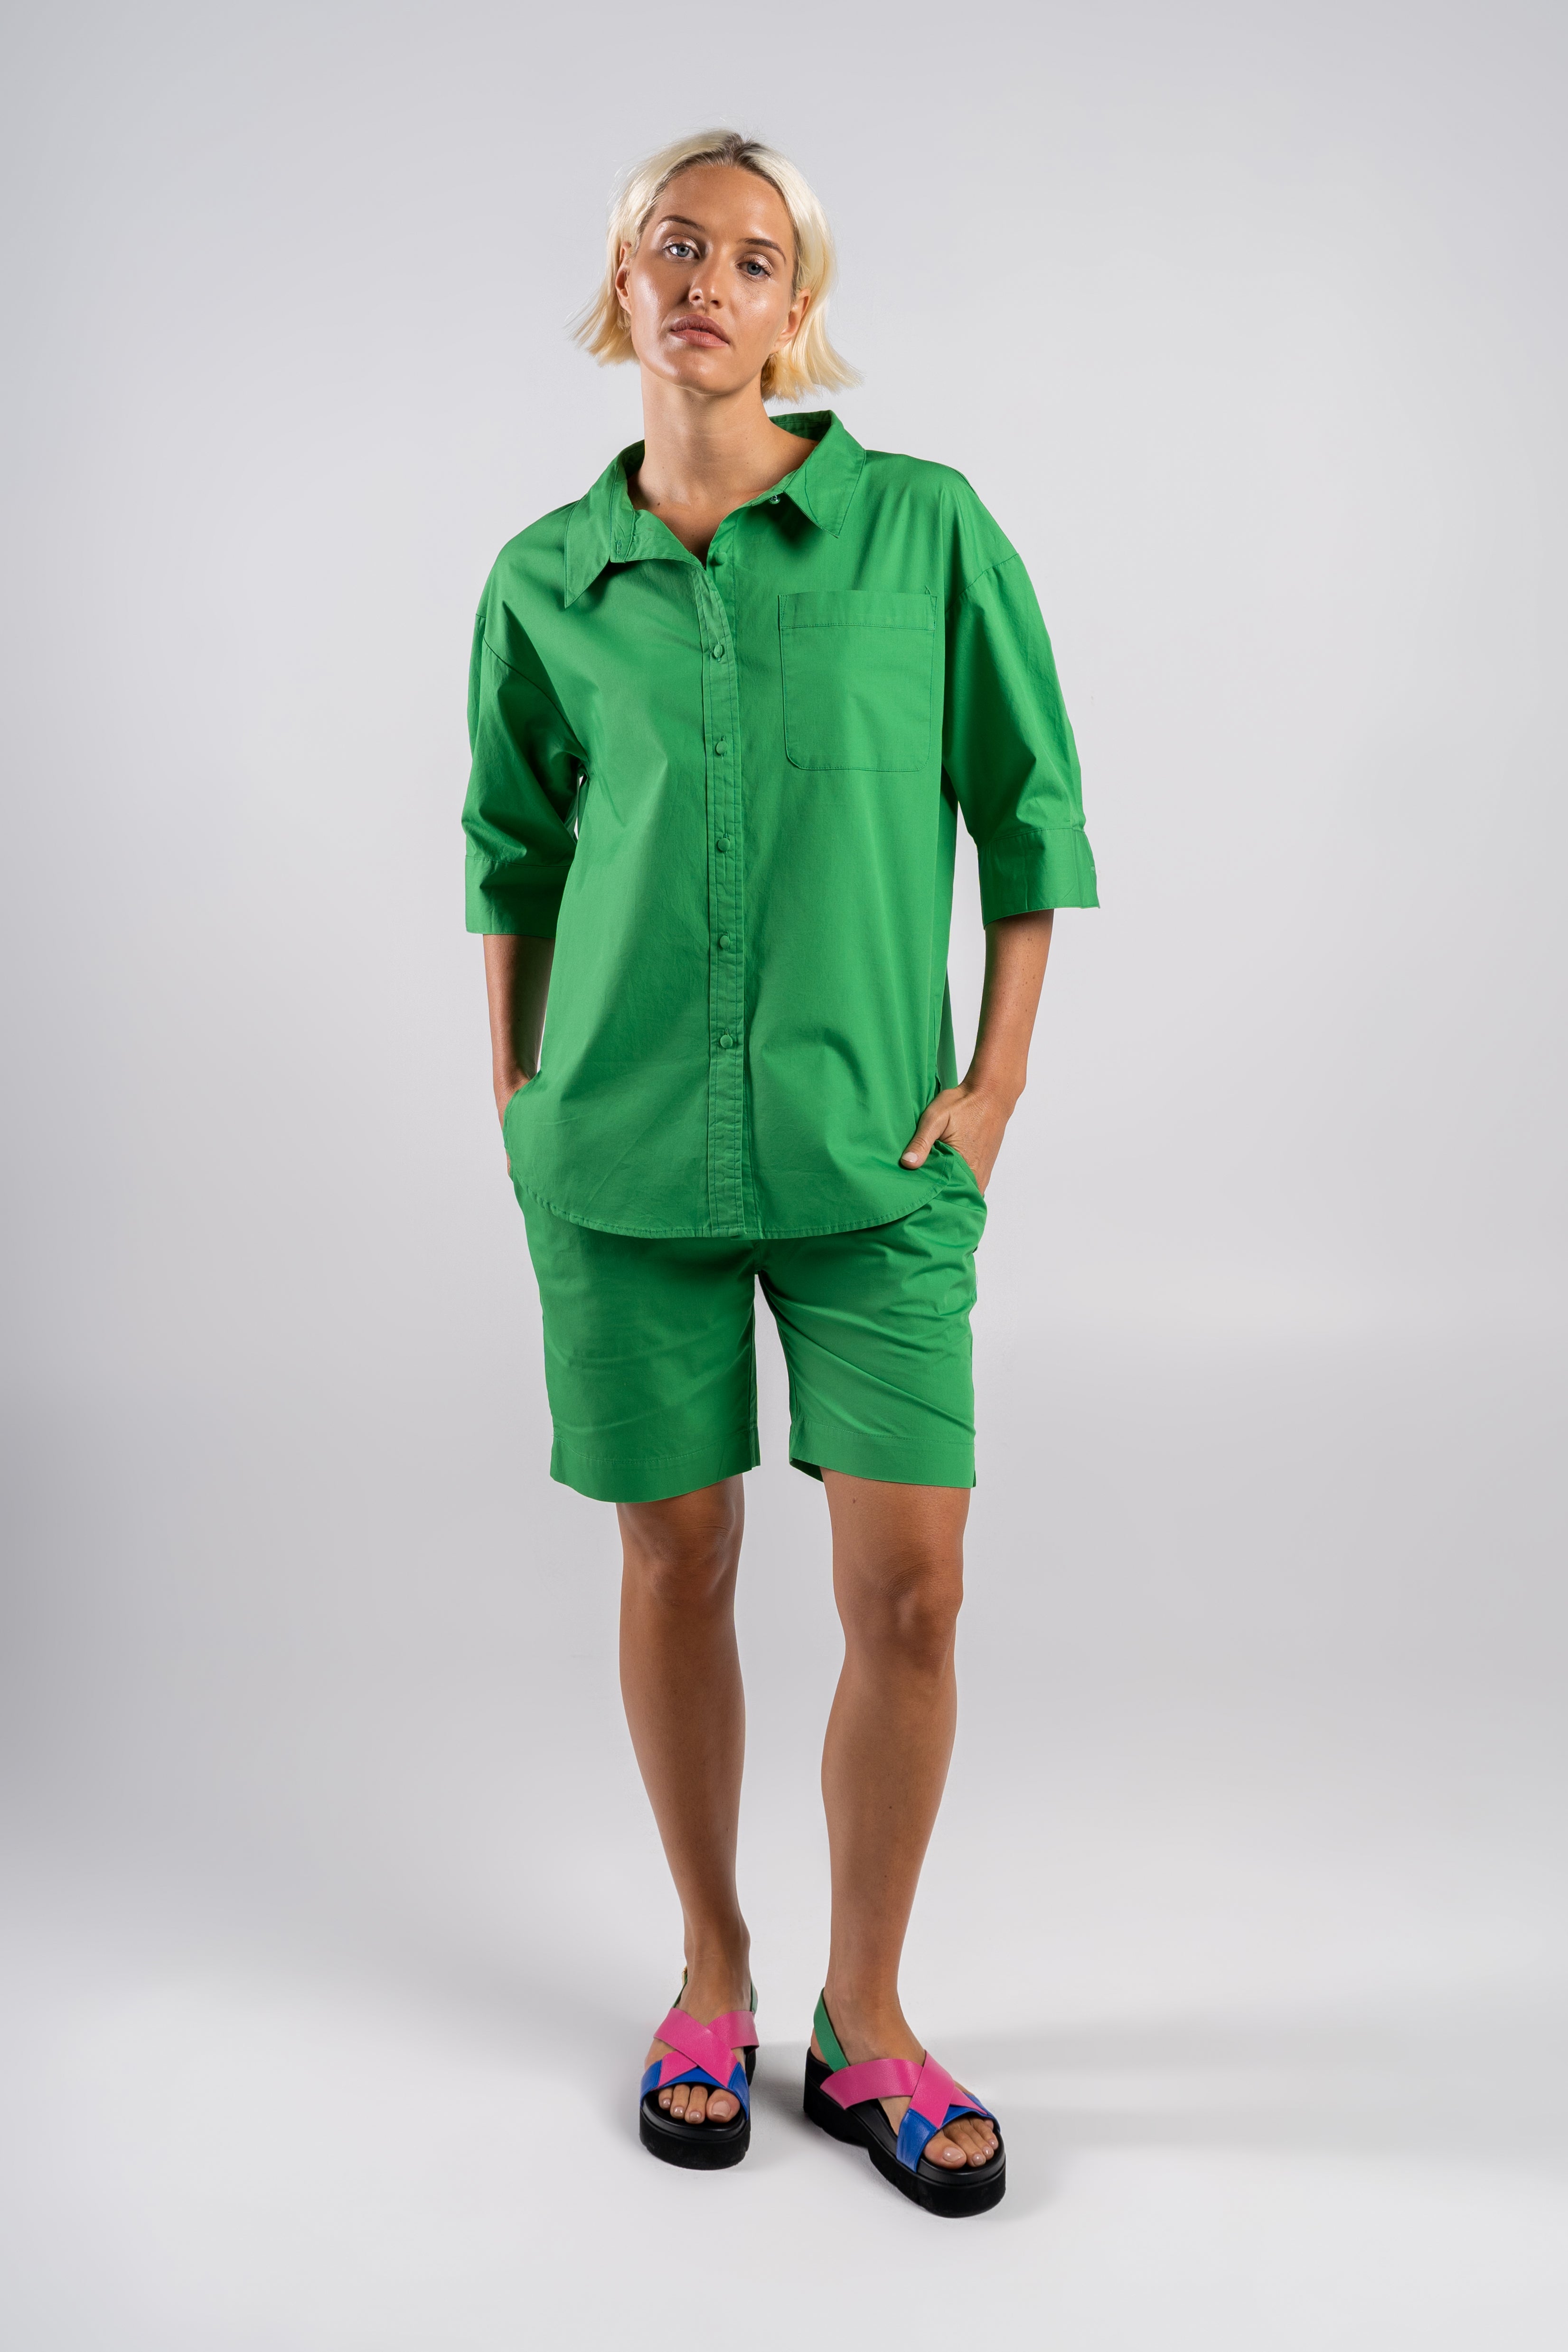 Wear Colour 1 Pocket Collared Shirt - Green